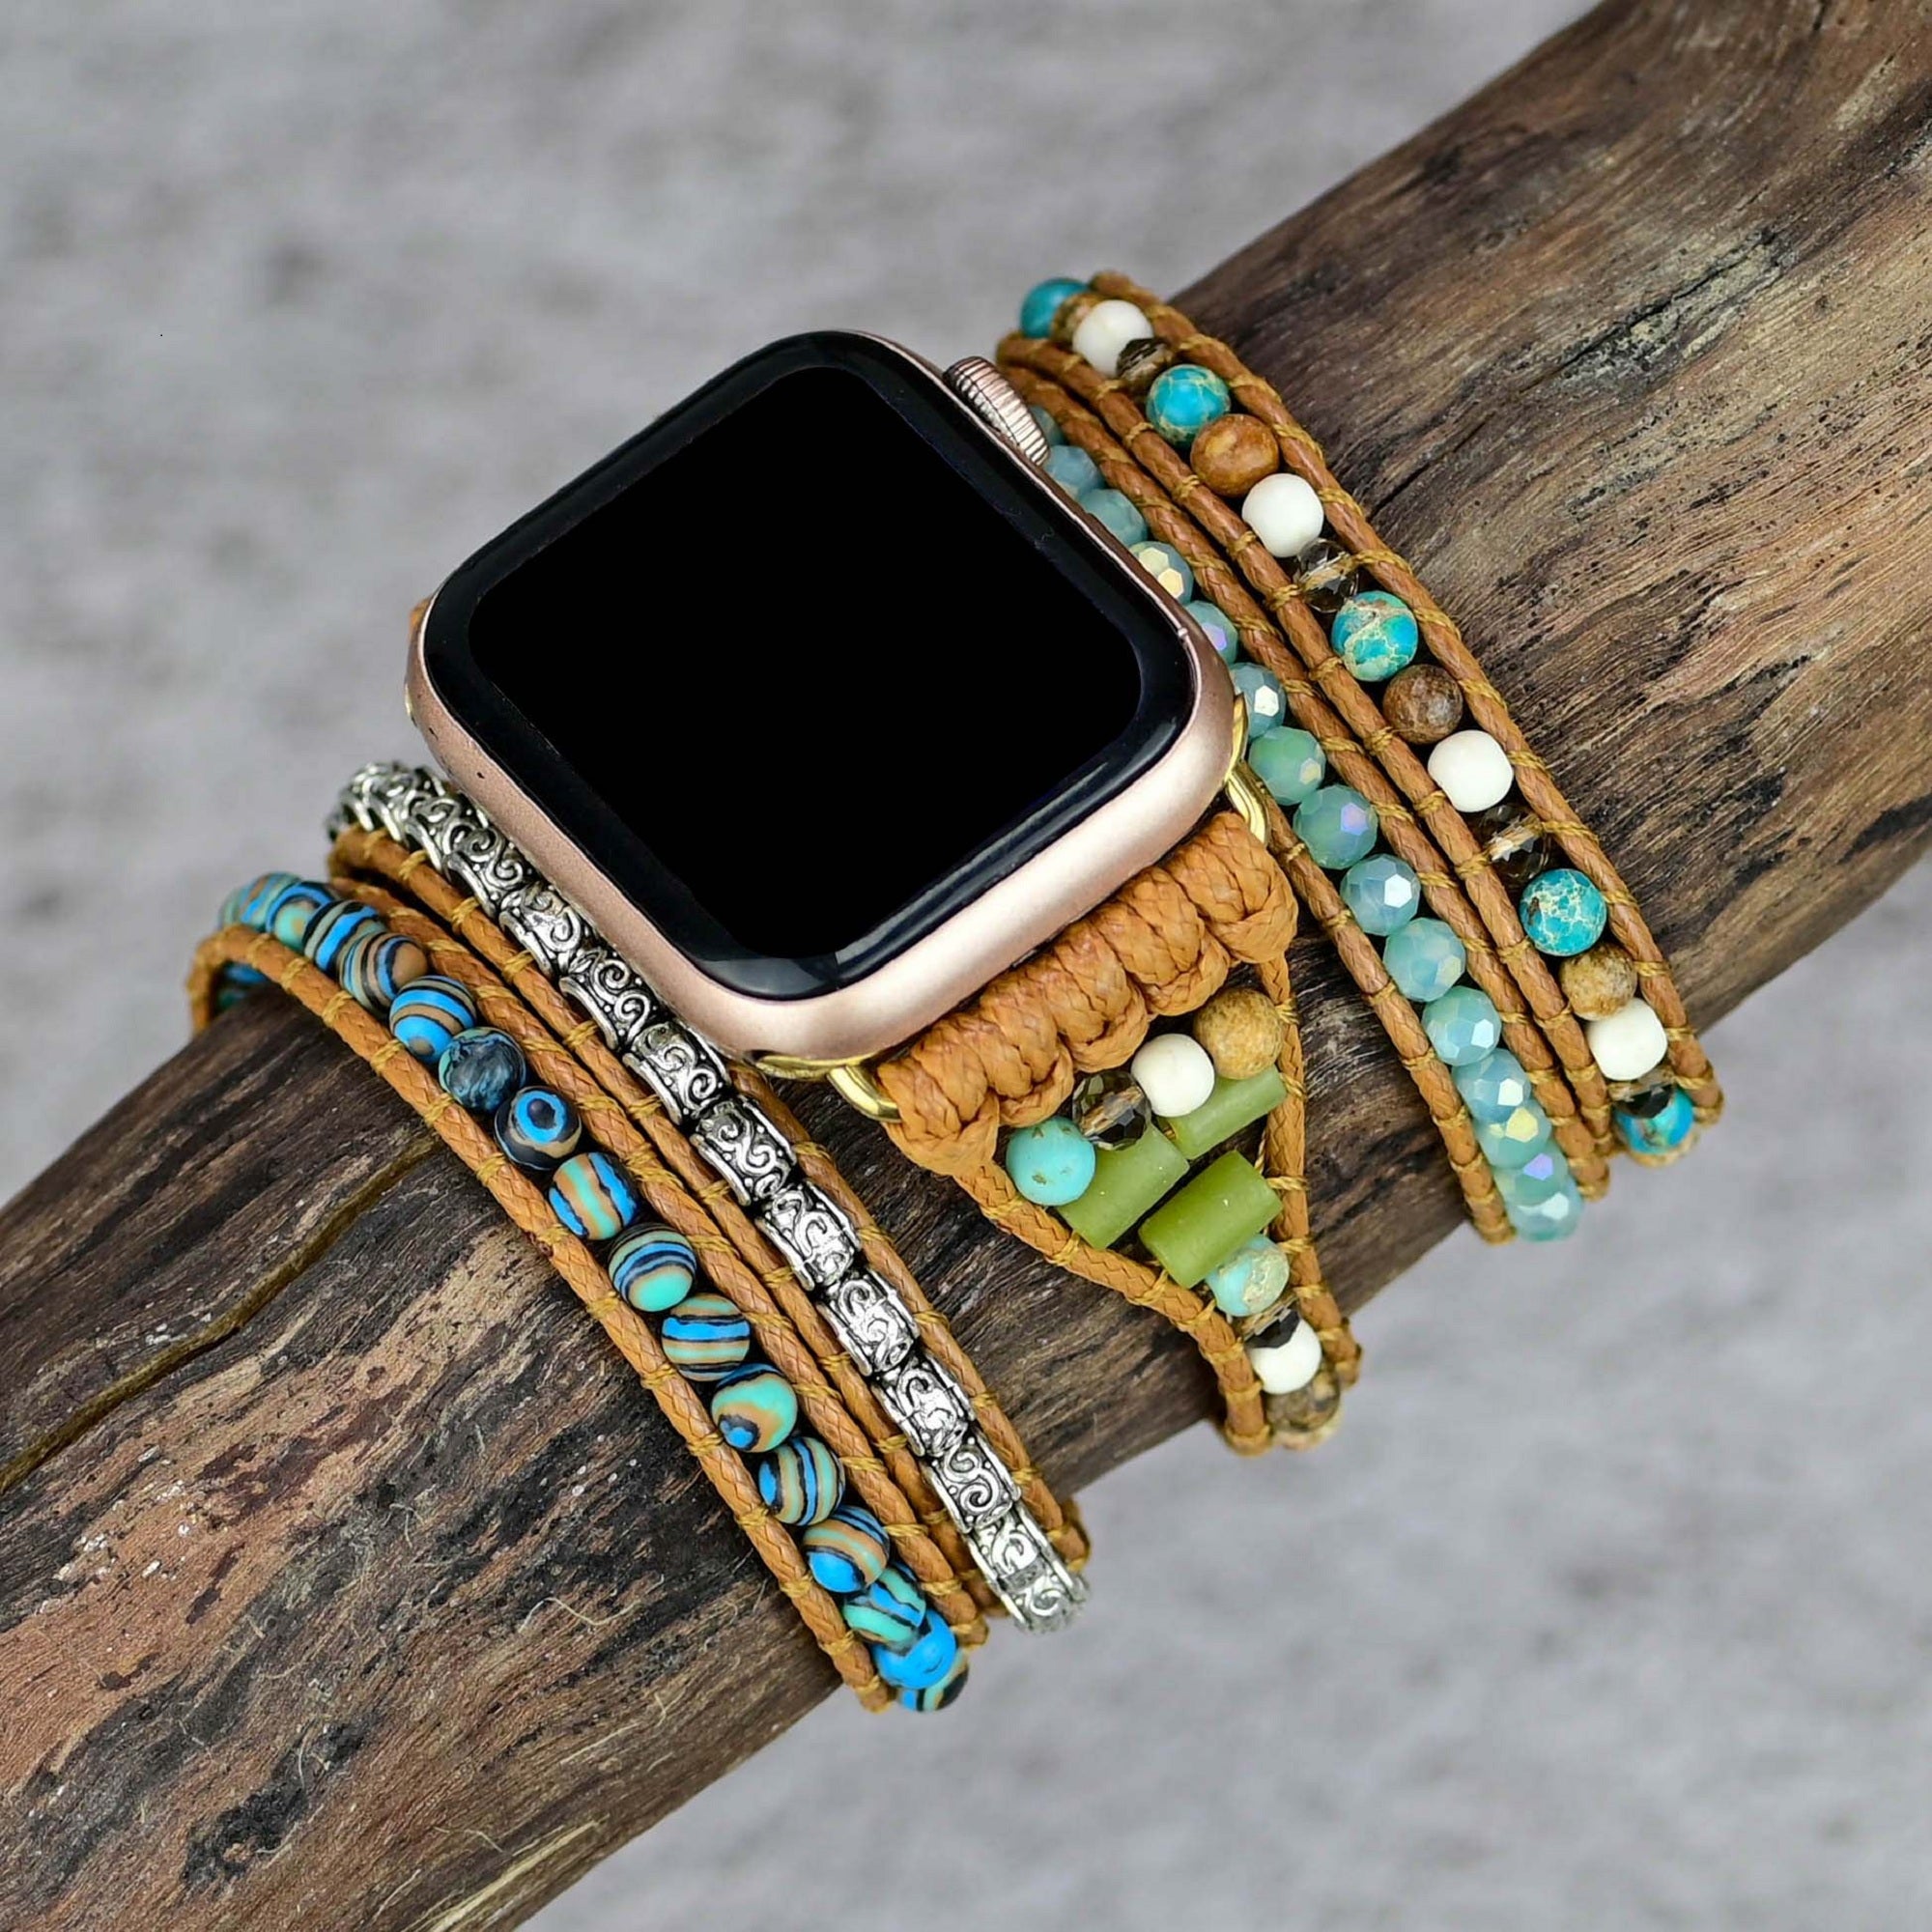 Teepollo Apple Watch Band Bracelet